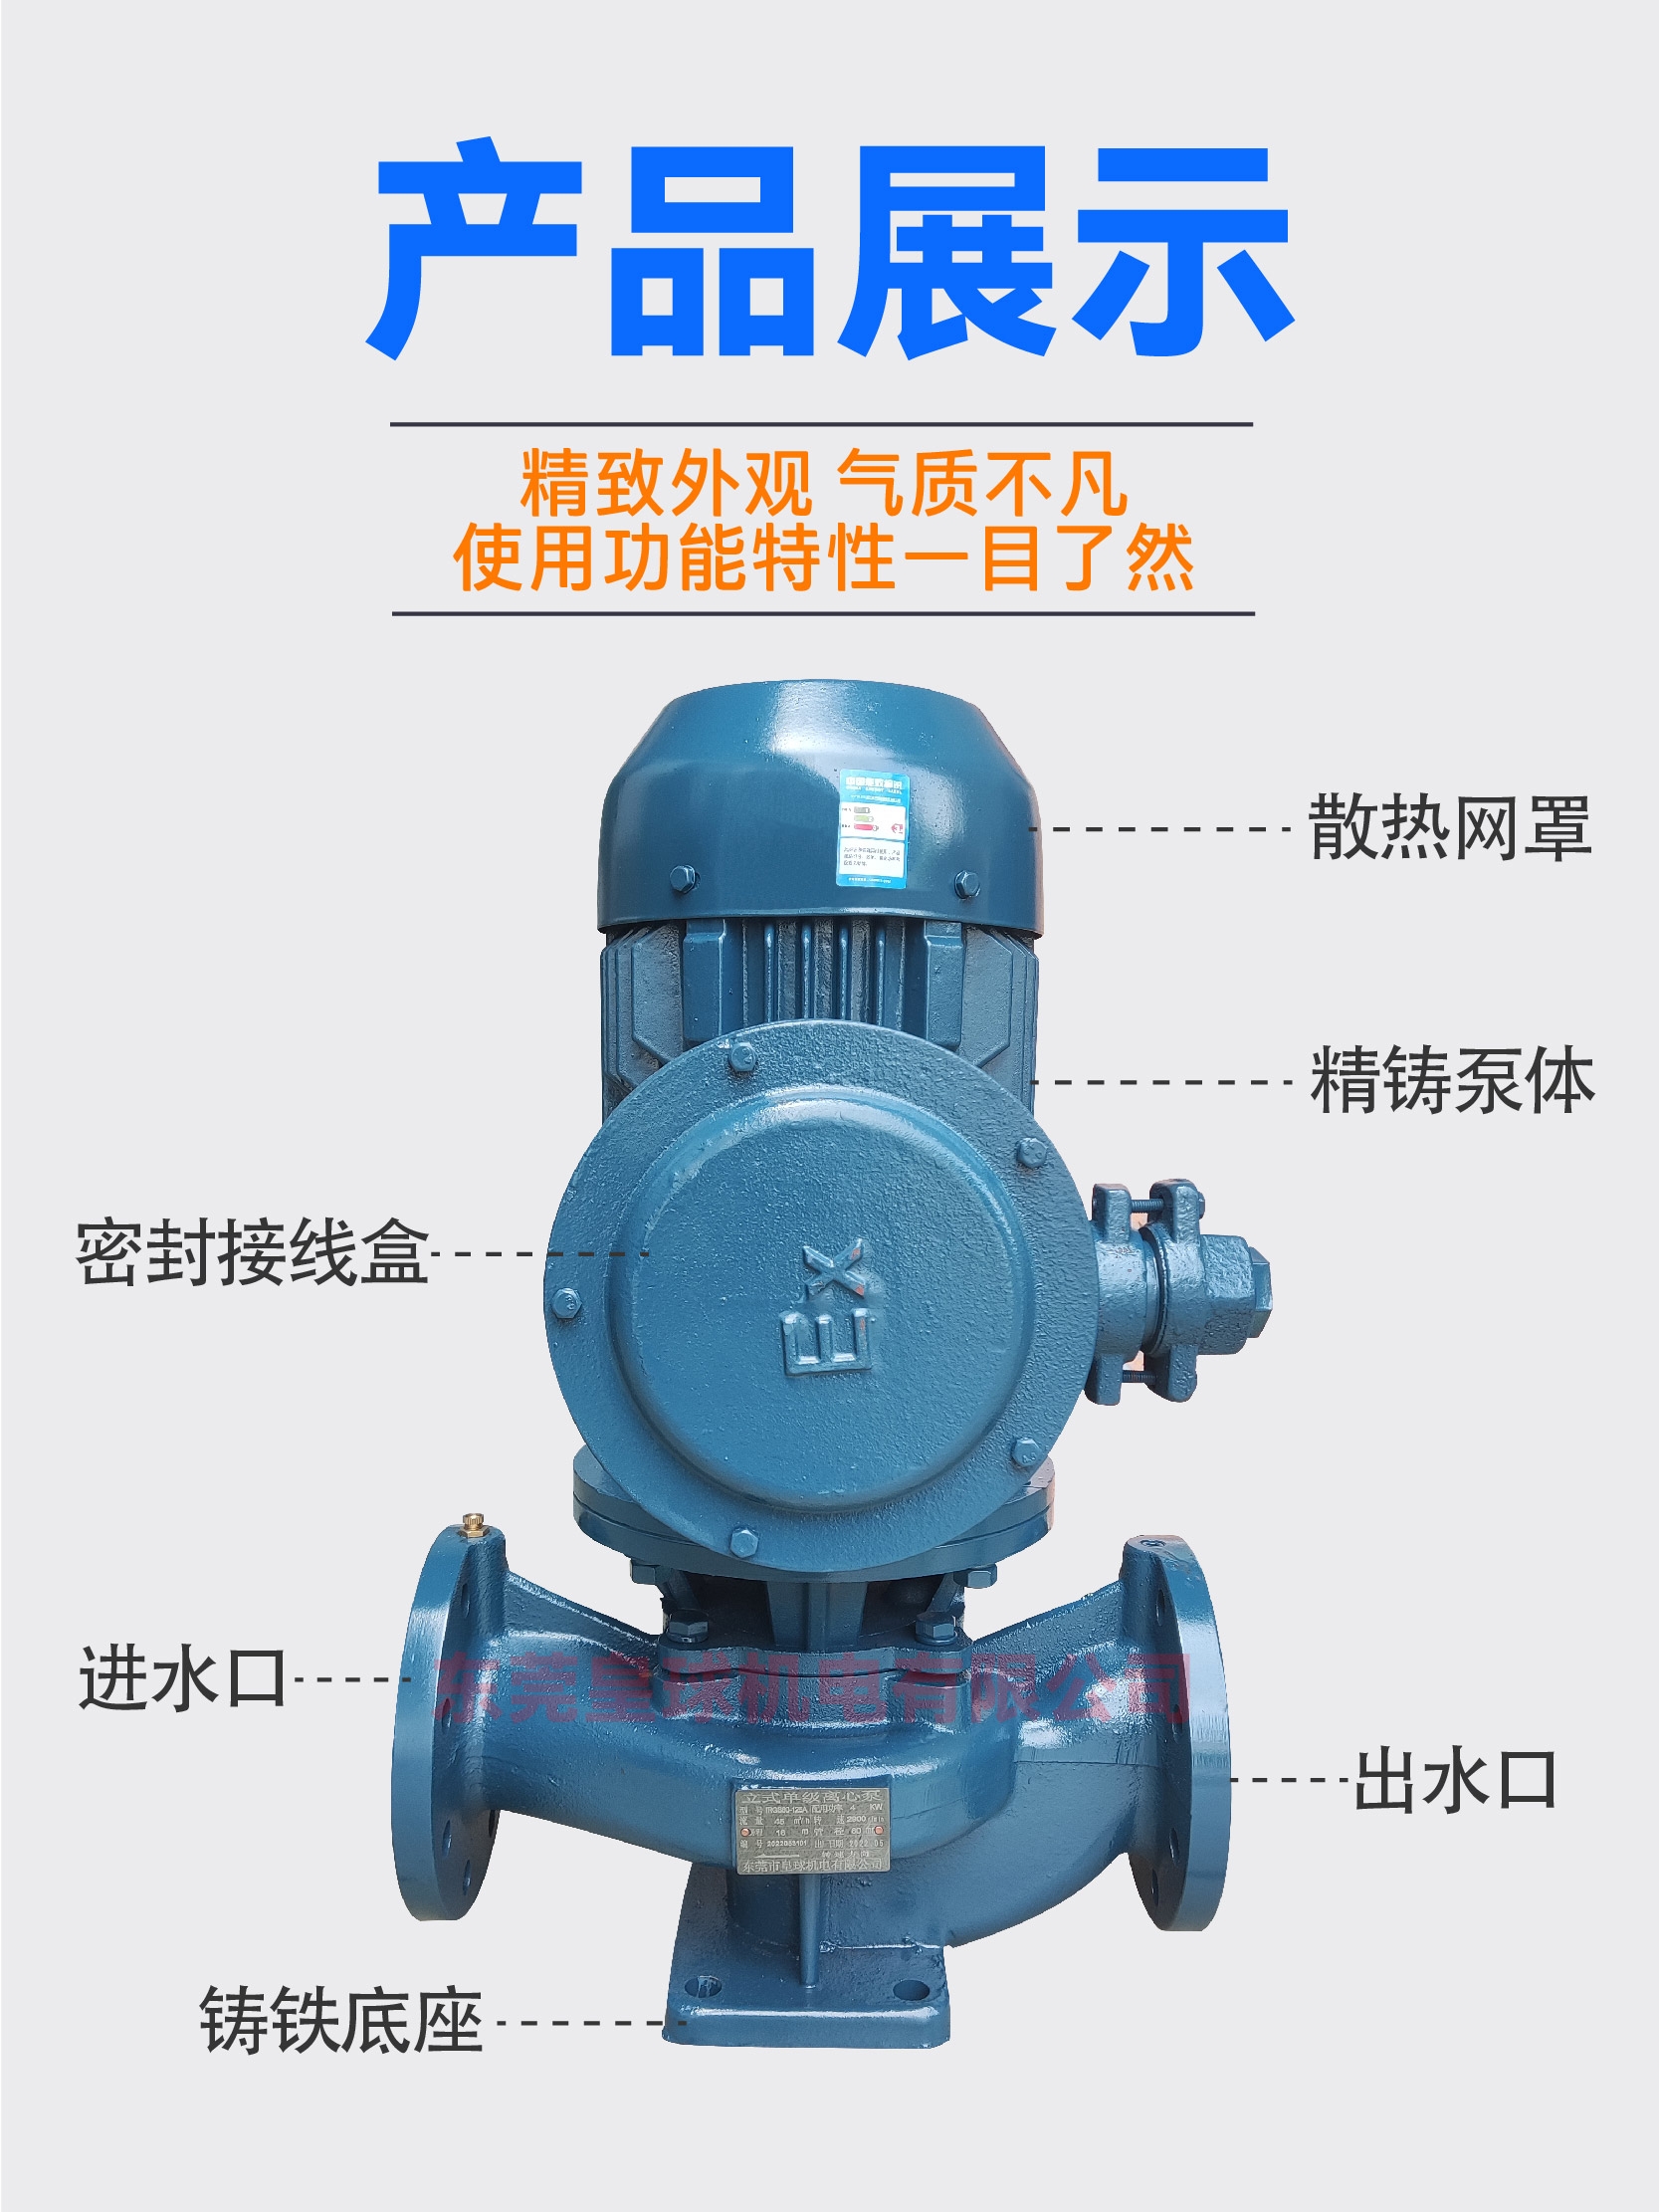 irg防爆立式管道泵上海都江热水循环增压离心泵工业锅炉冷却水泵